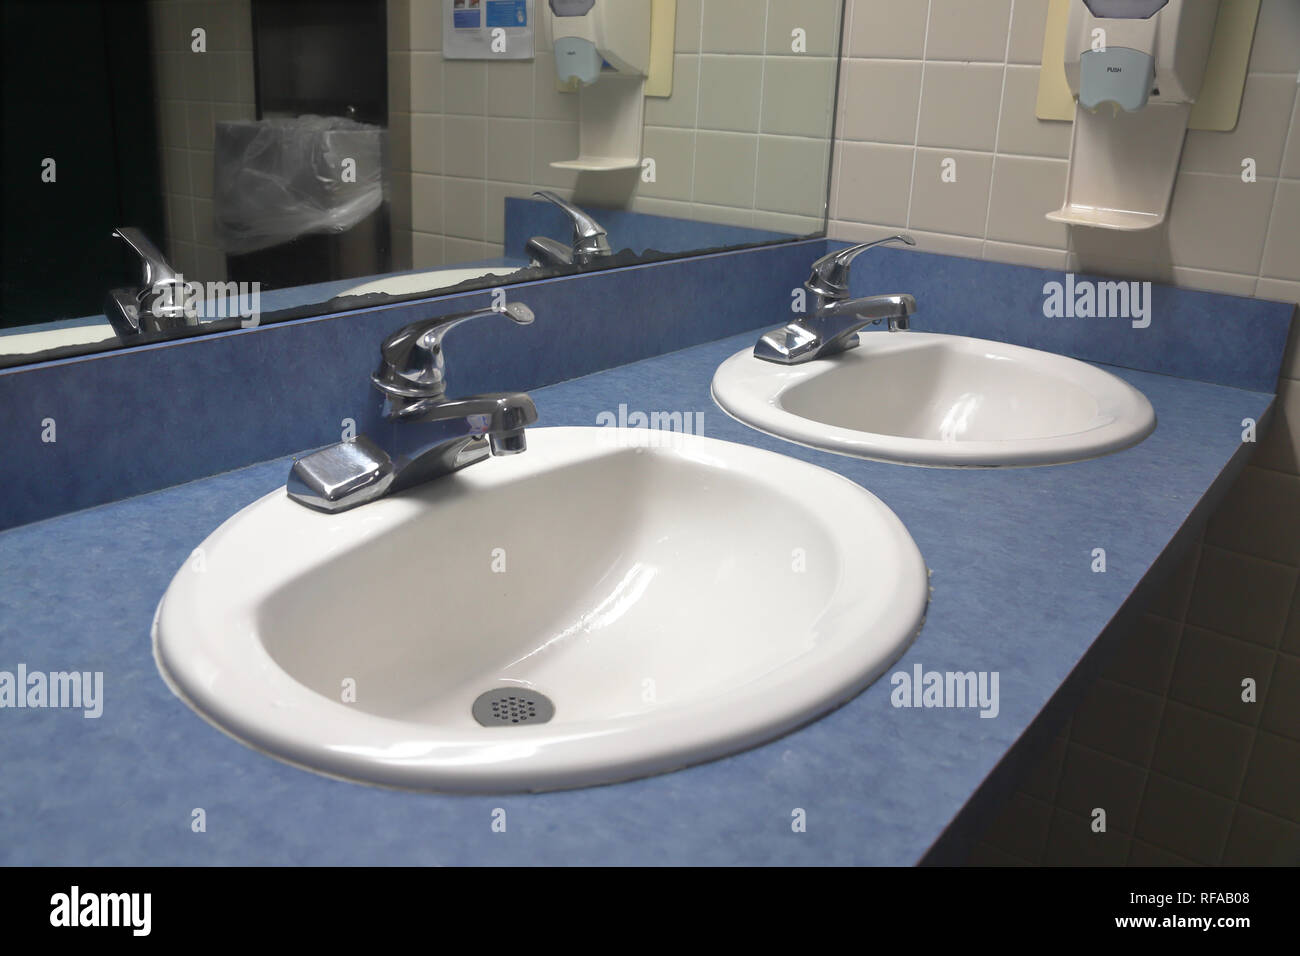 Sinks in public restroom Stock Photo